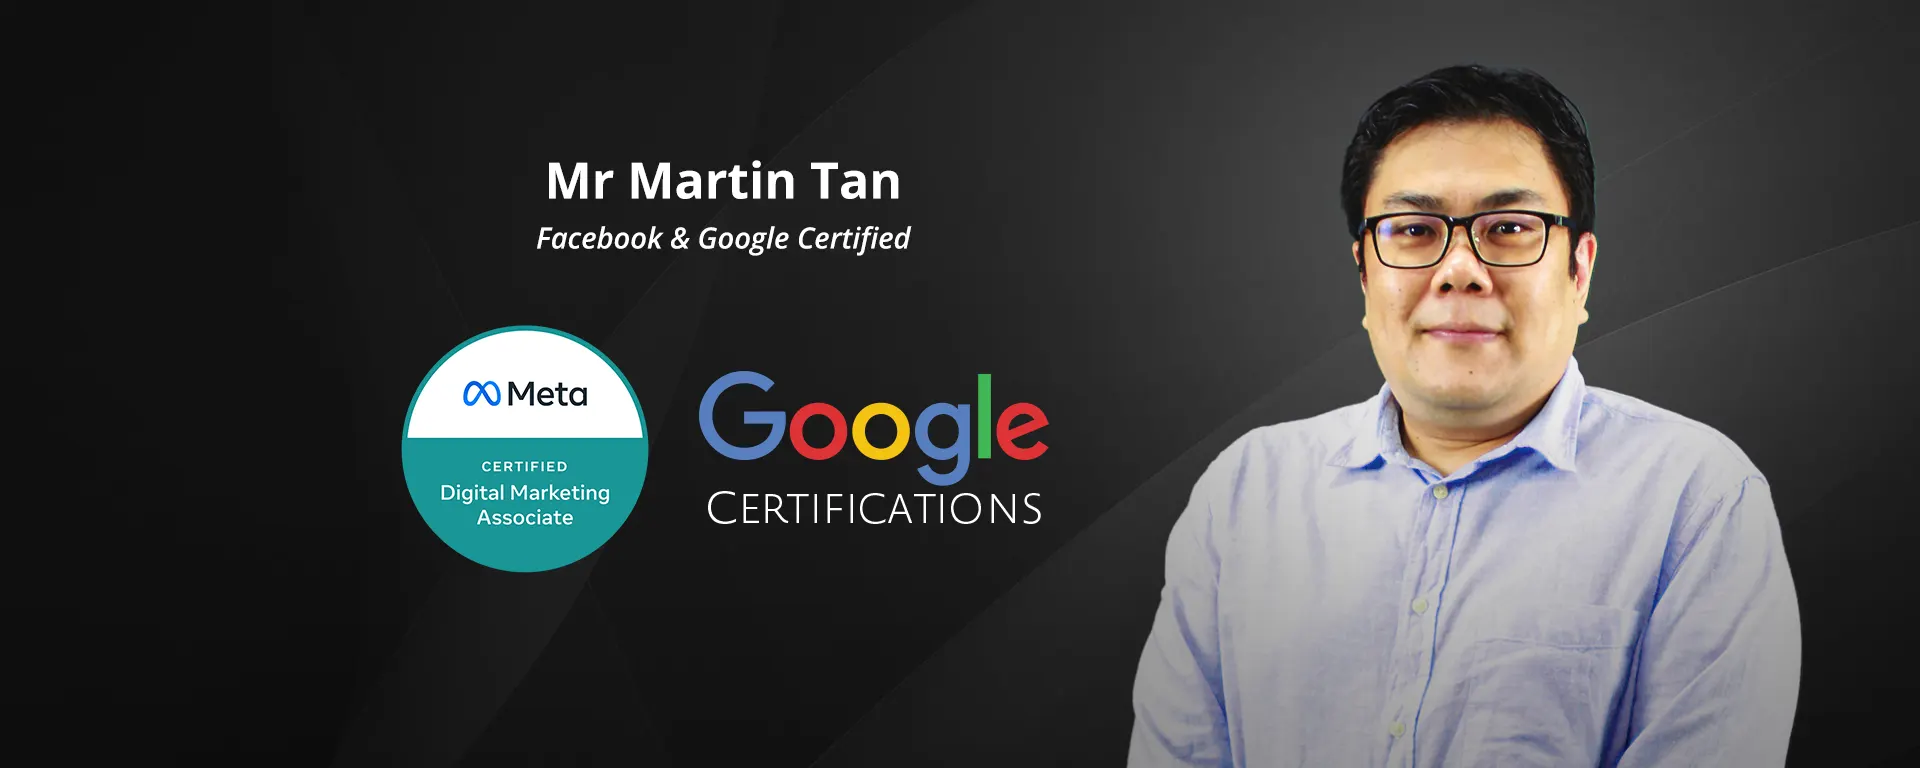 Martin Tan - Facebook and Google Certified